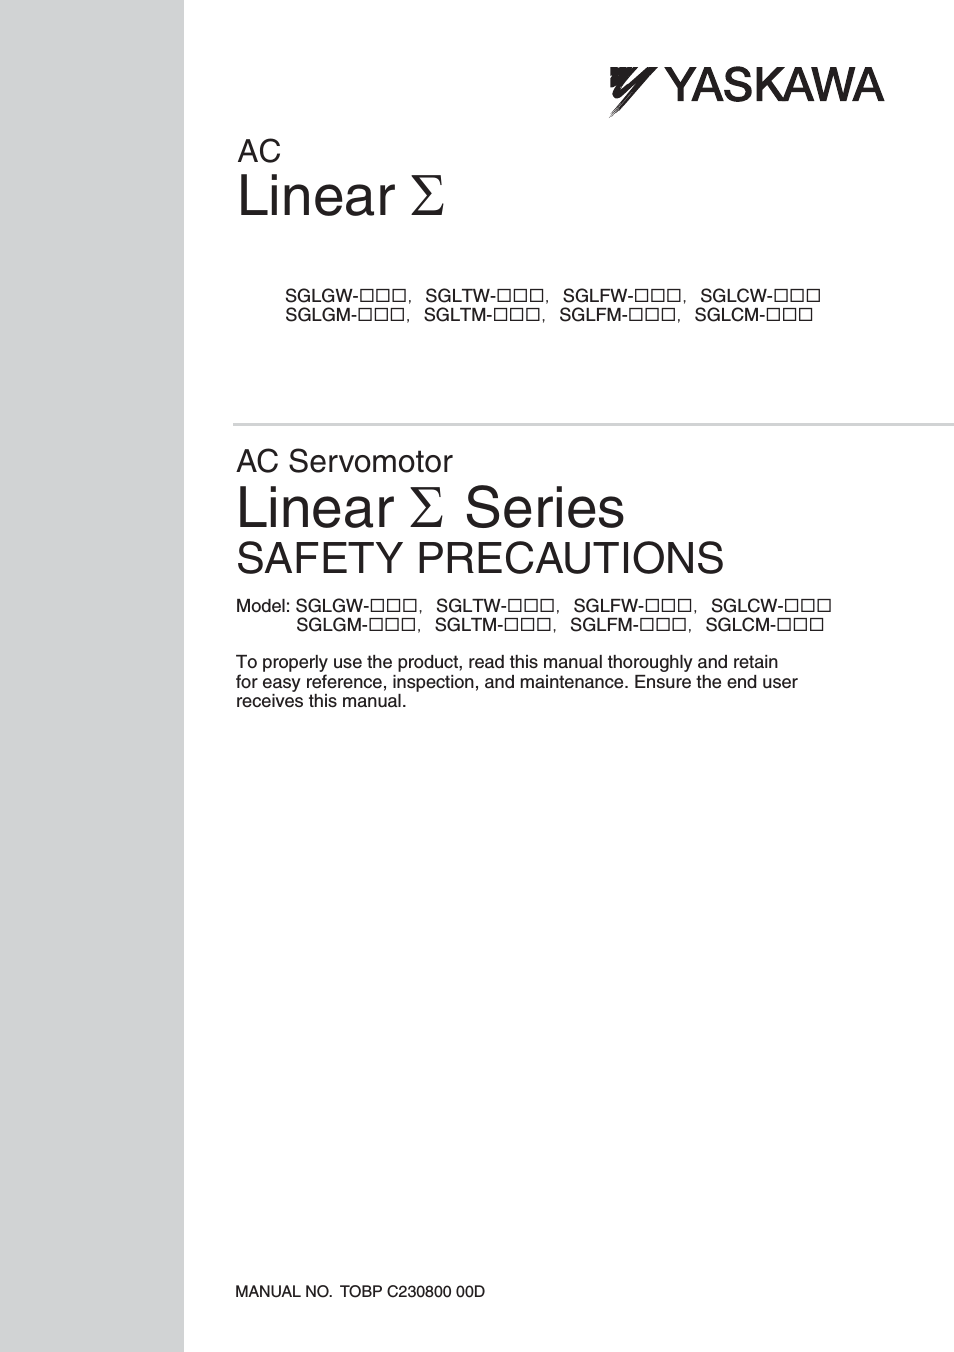 AC Servomotor Linear (Sigma) Series